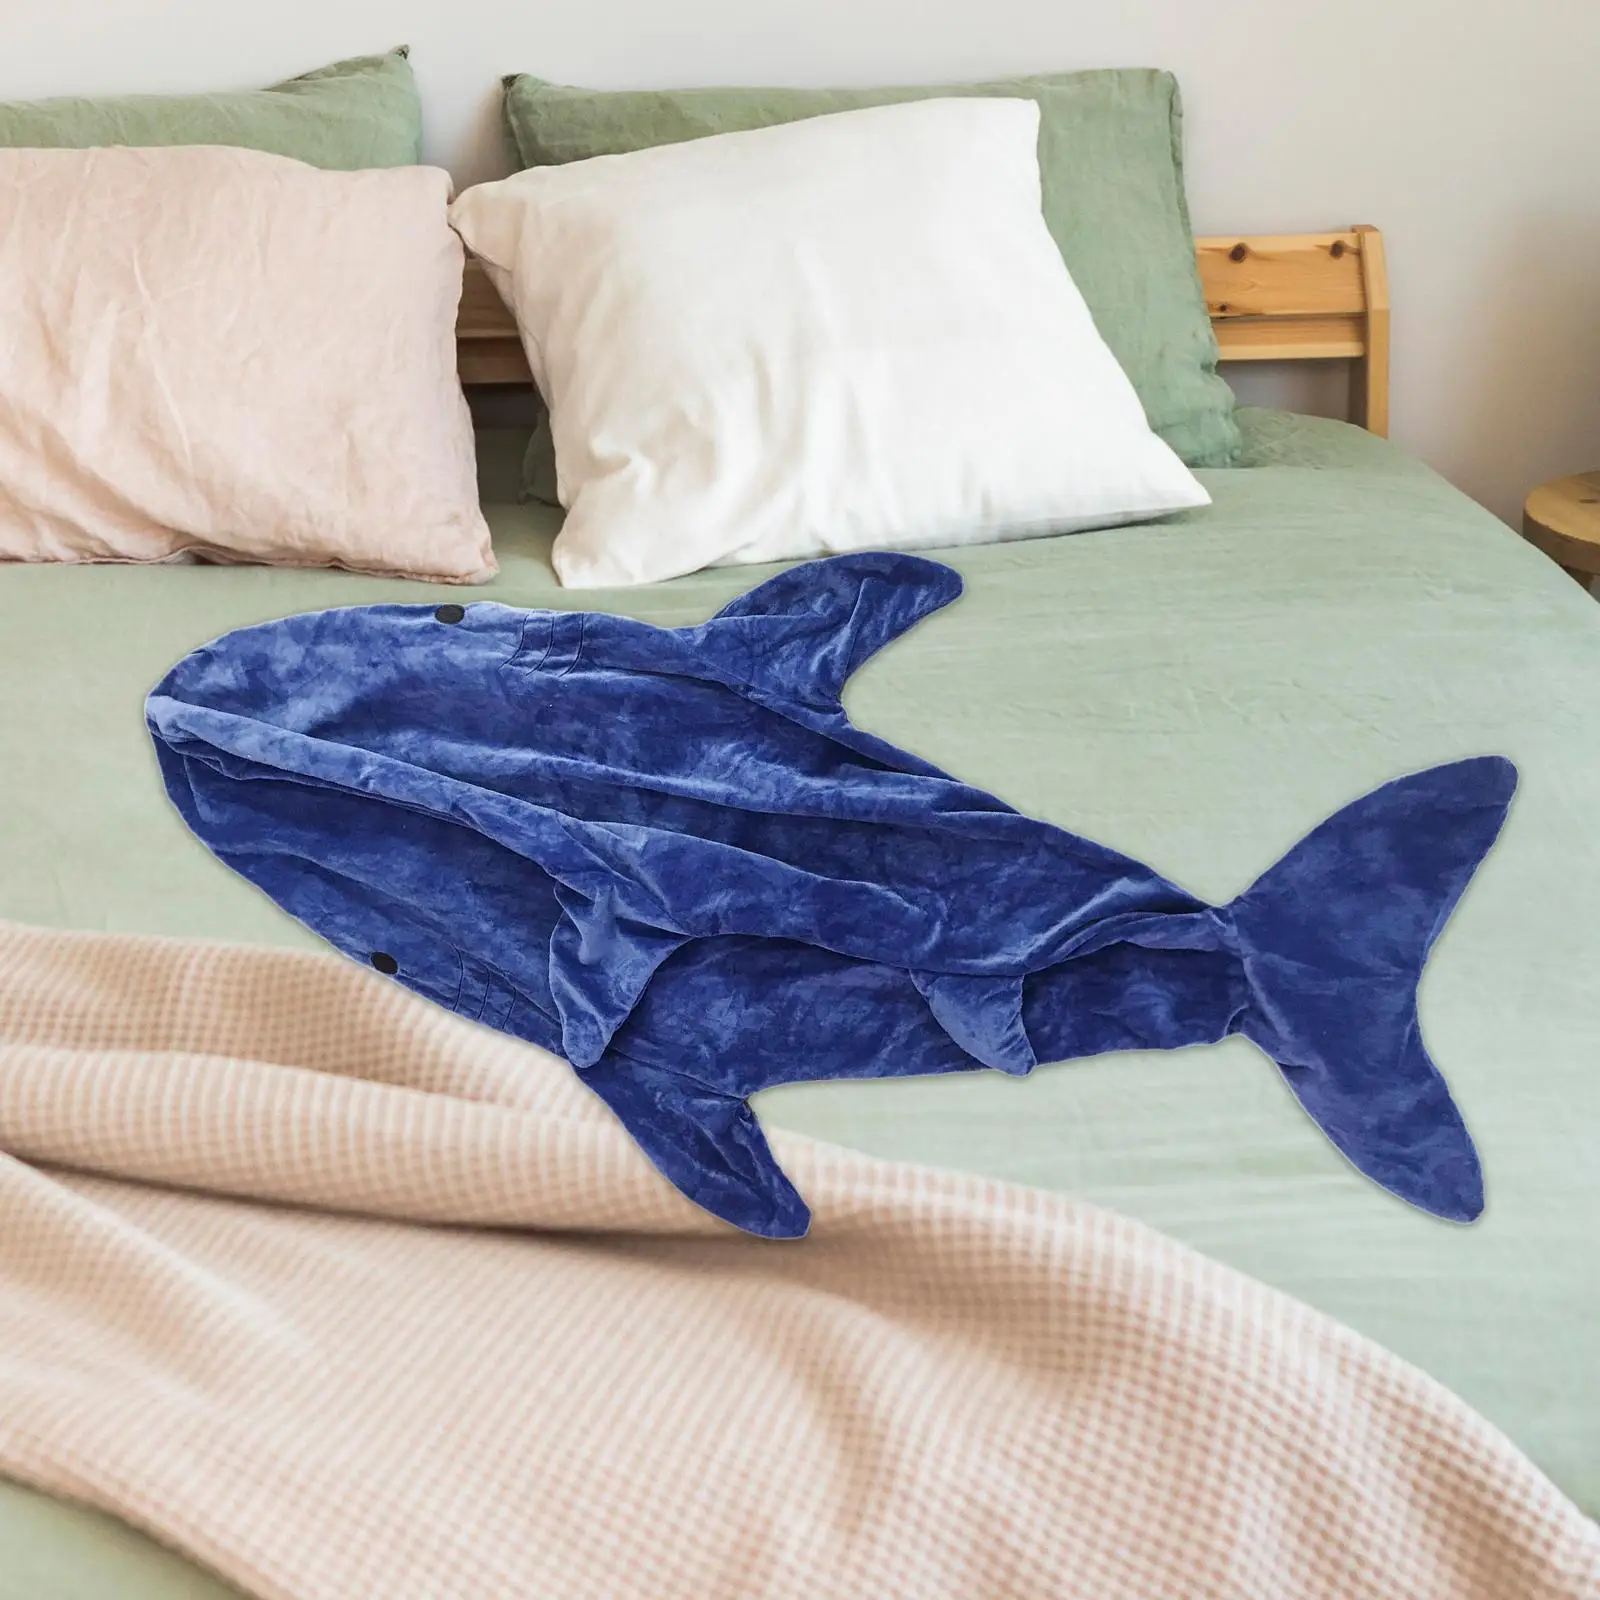 Cute Stuffed Plush Shark Shell Companions Ornament Throw Pillow Hood for Bedroom Living Room Housewarming Easter Halloween